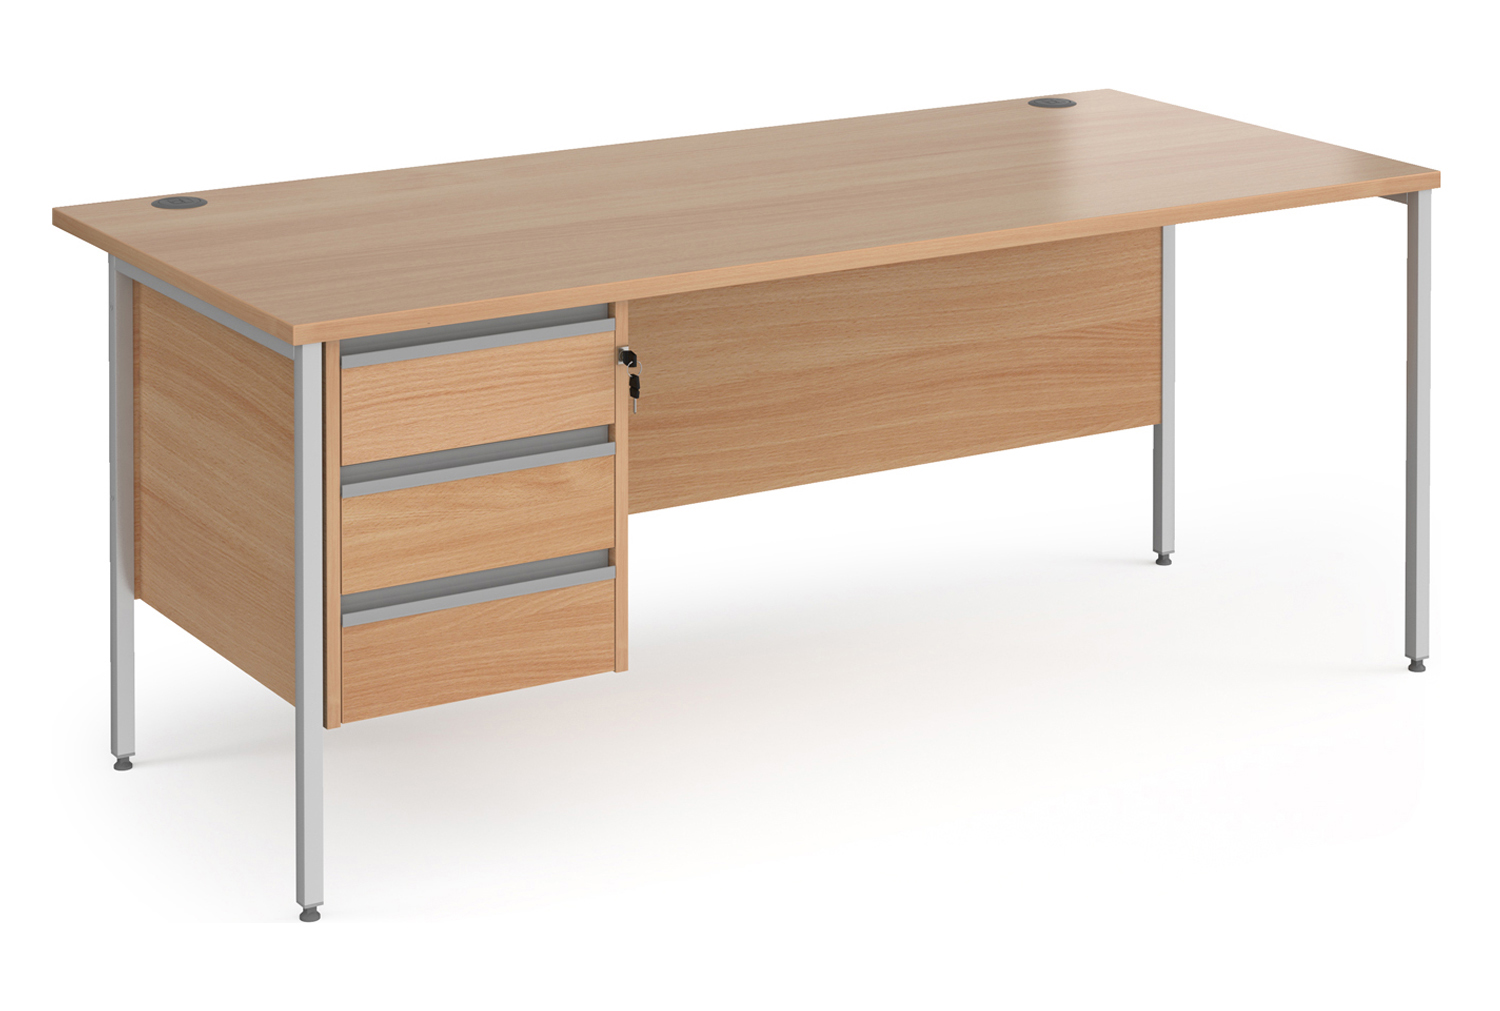 Value Line Classic+ Rectangular H-Leg Office Desk 3 Drawers (Silver Leg), 180wx80dx73h (cm), Beech